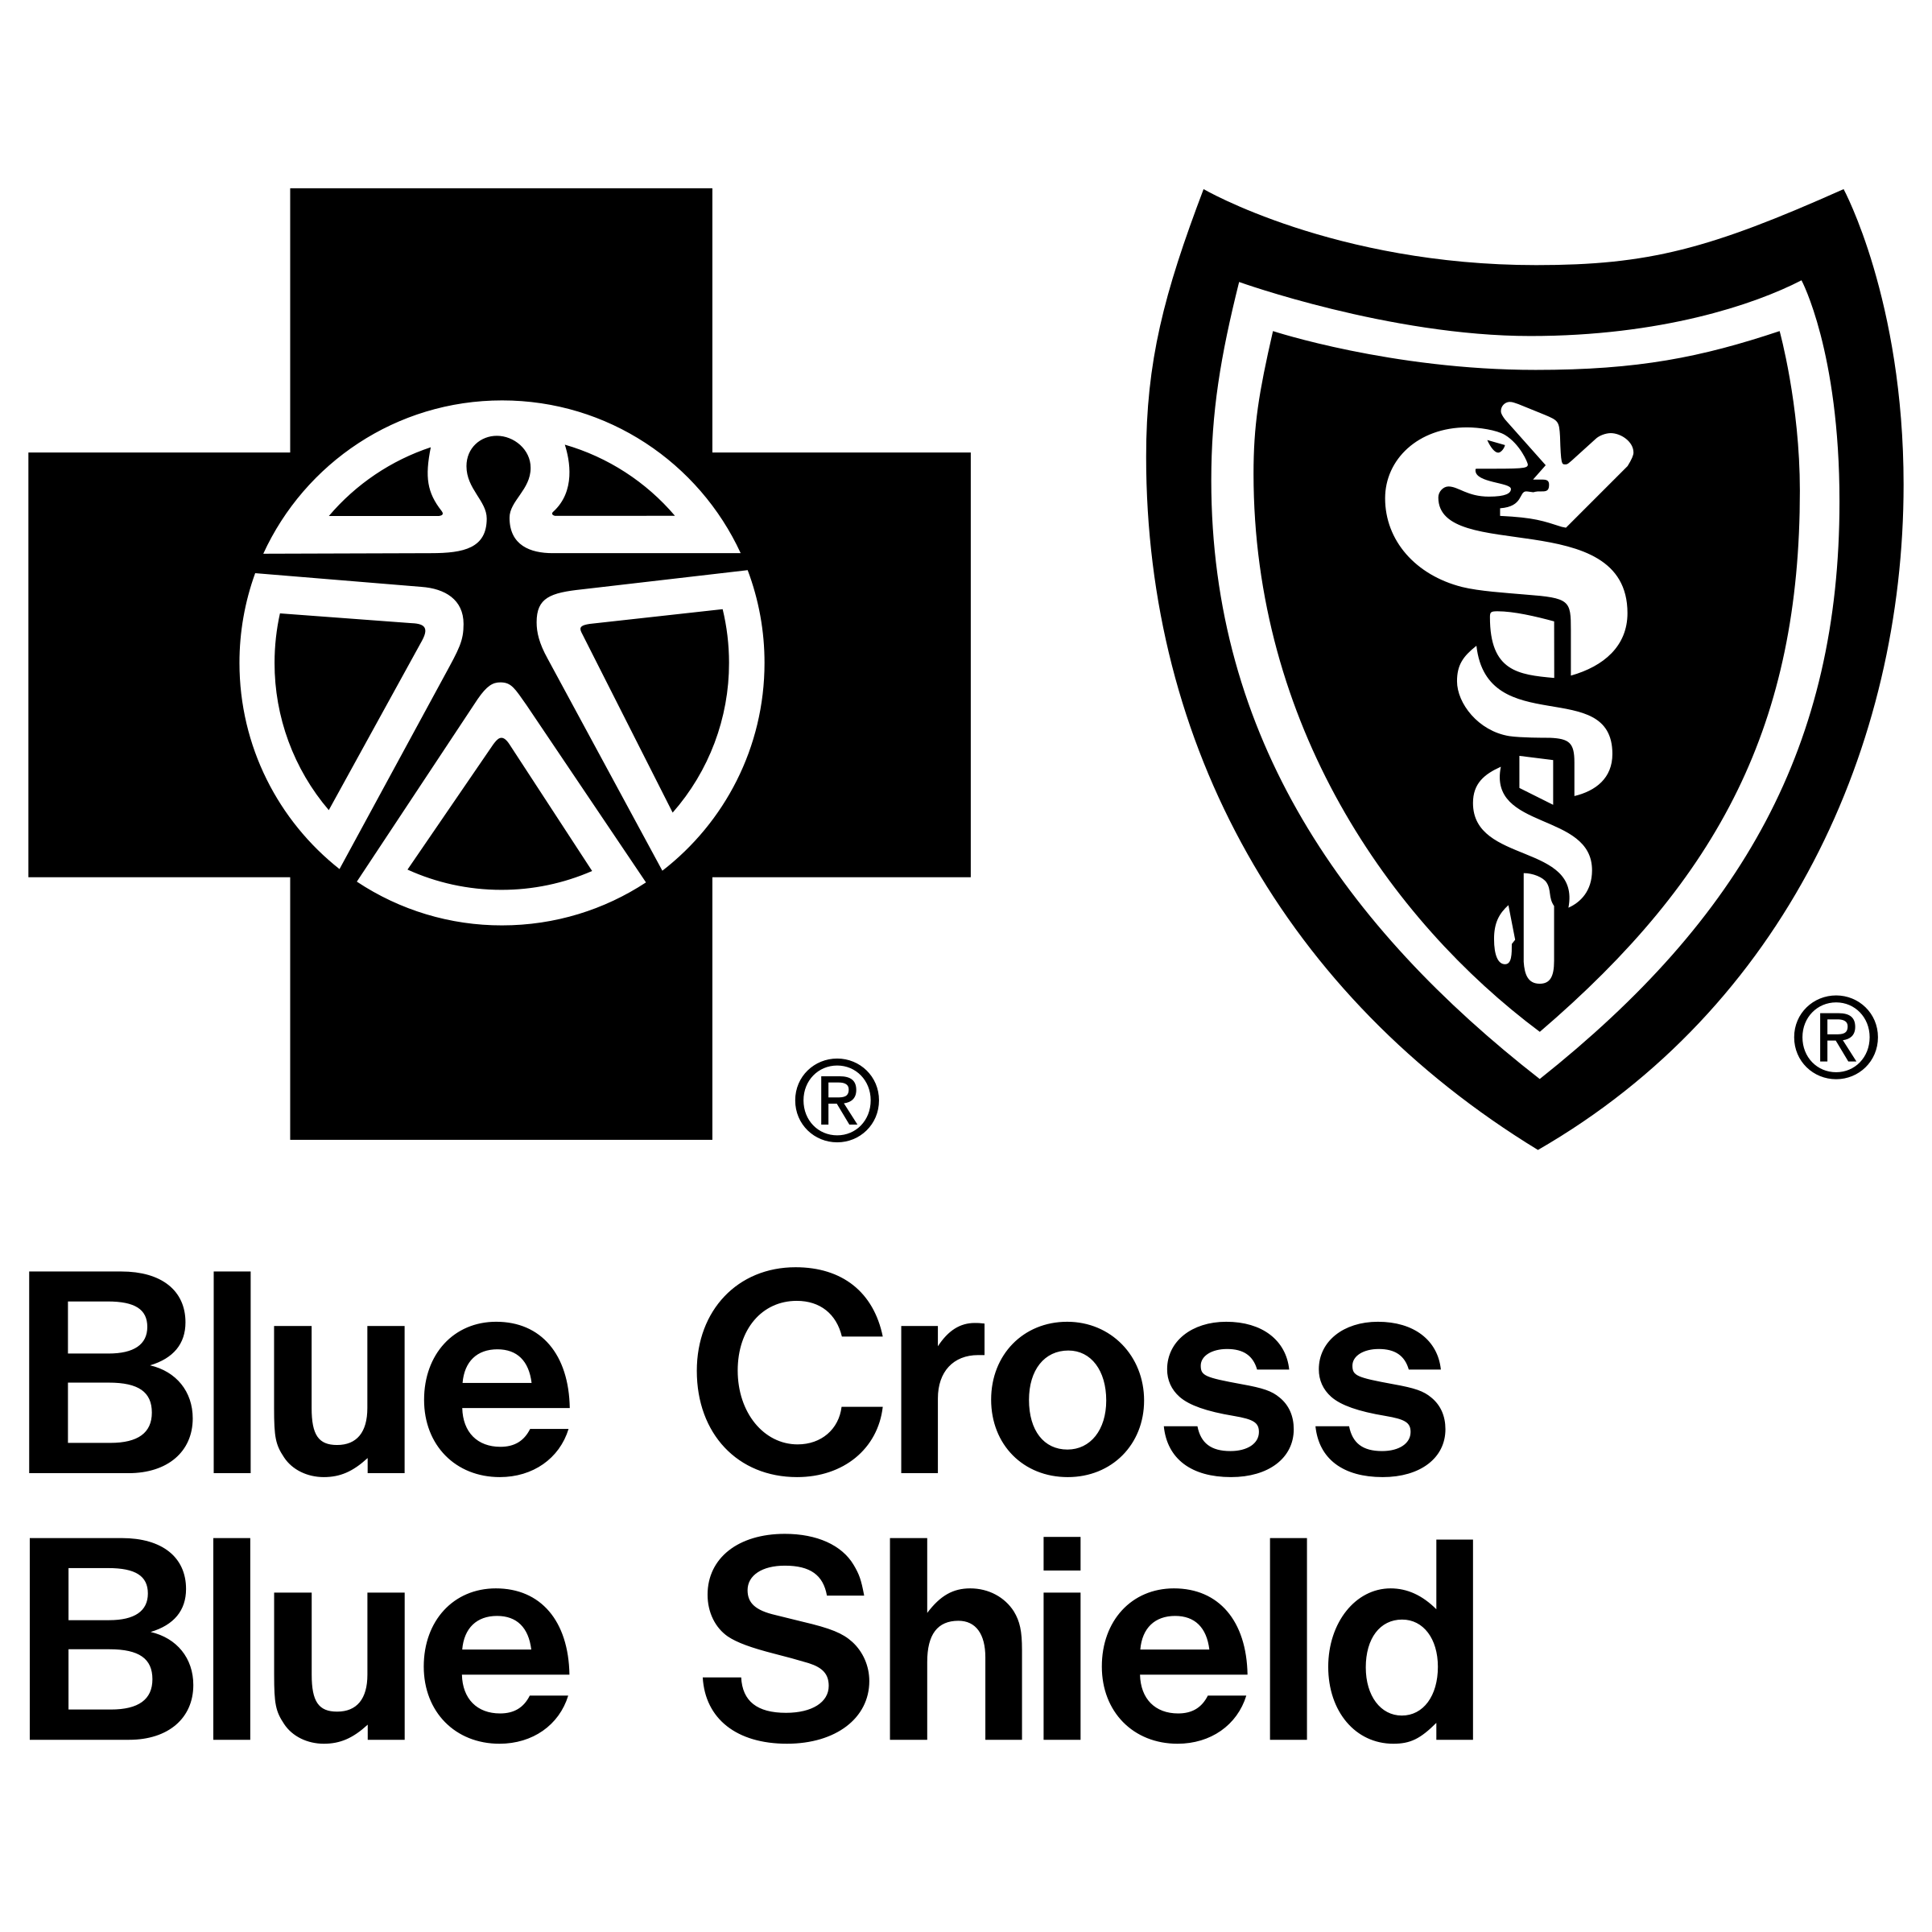 White and Blue Shield Logo - Blue Cross Blue Shield Logo PNG Transparent & SVG Vector - Freebie ...